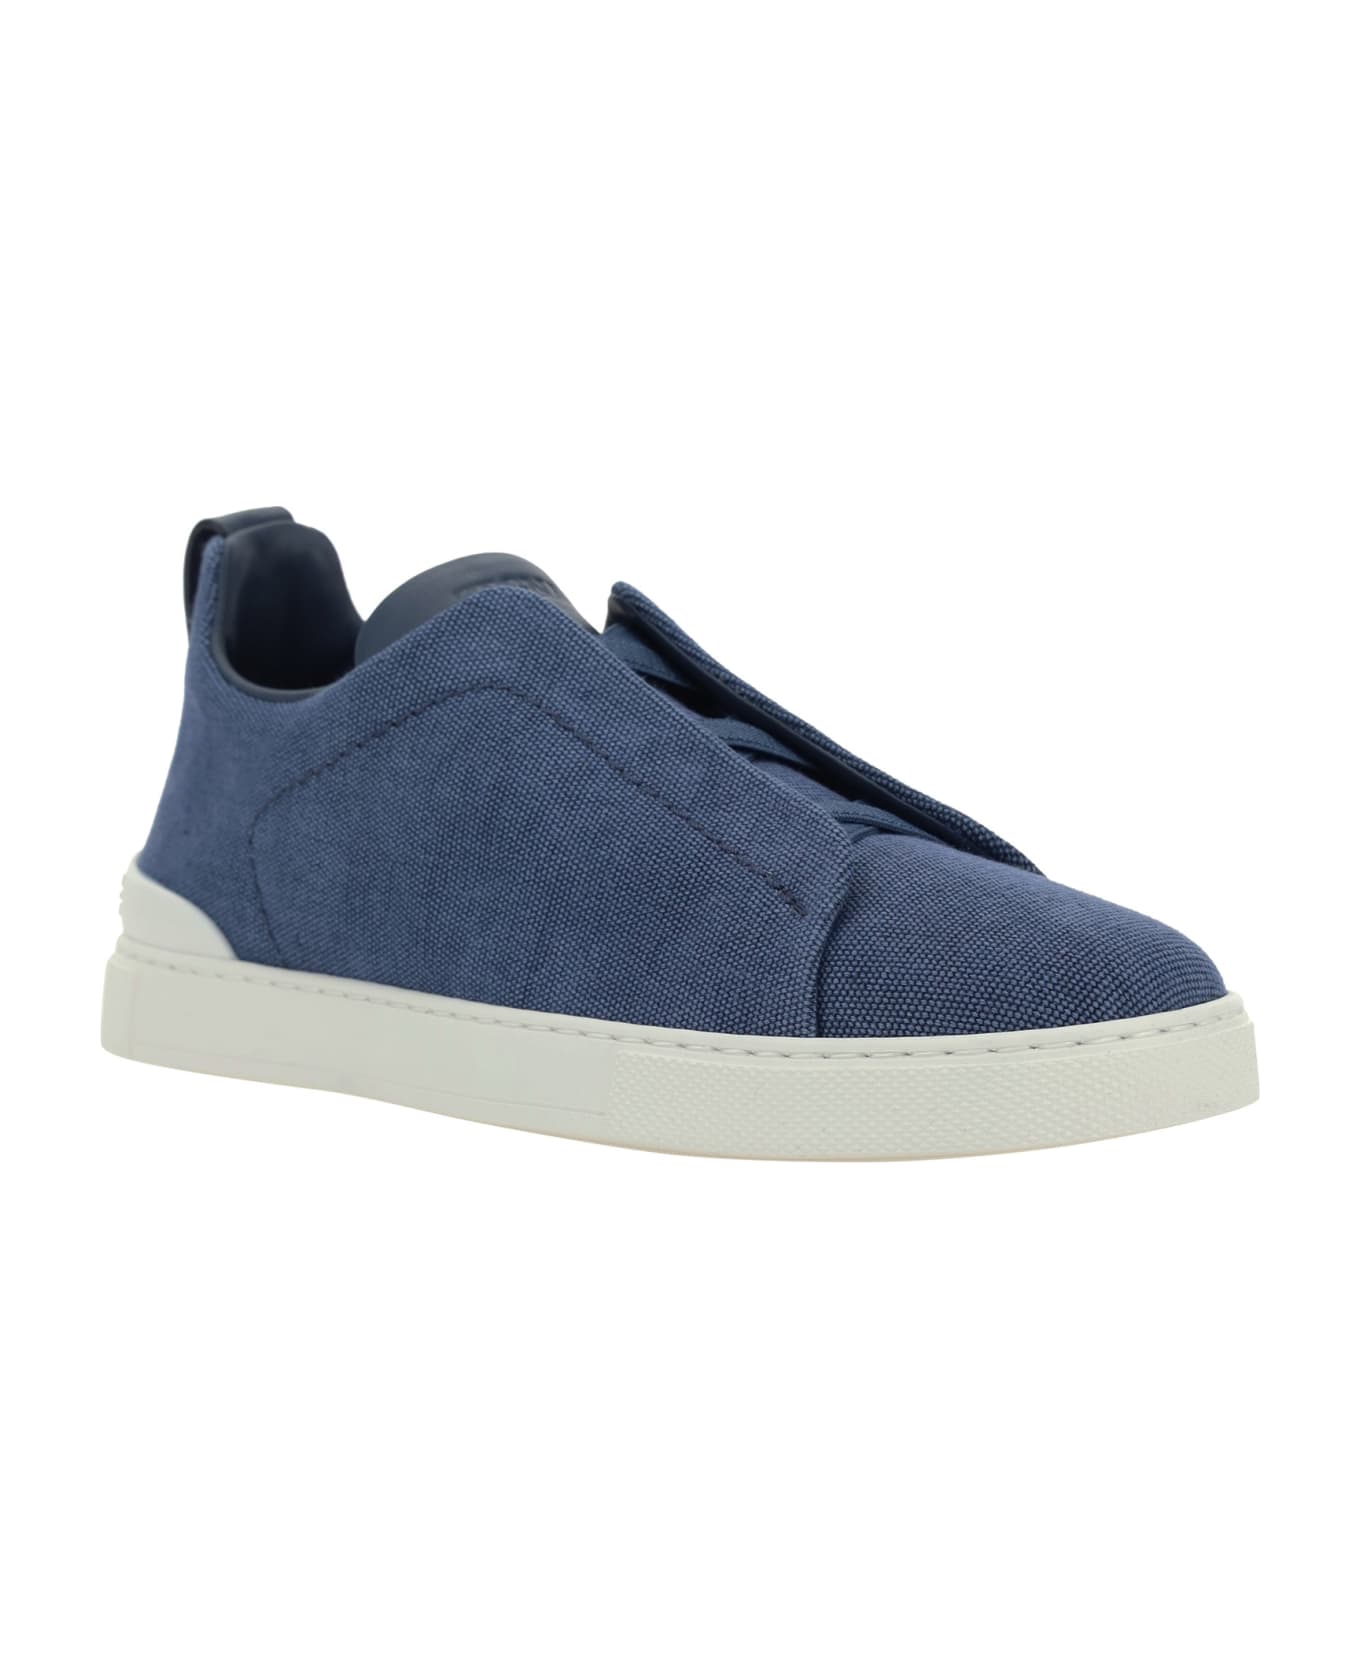 Zegna Low Top Sneakers - Blue Medio Unito